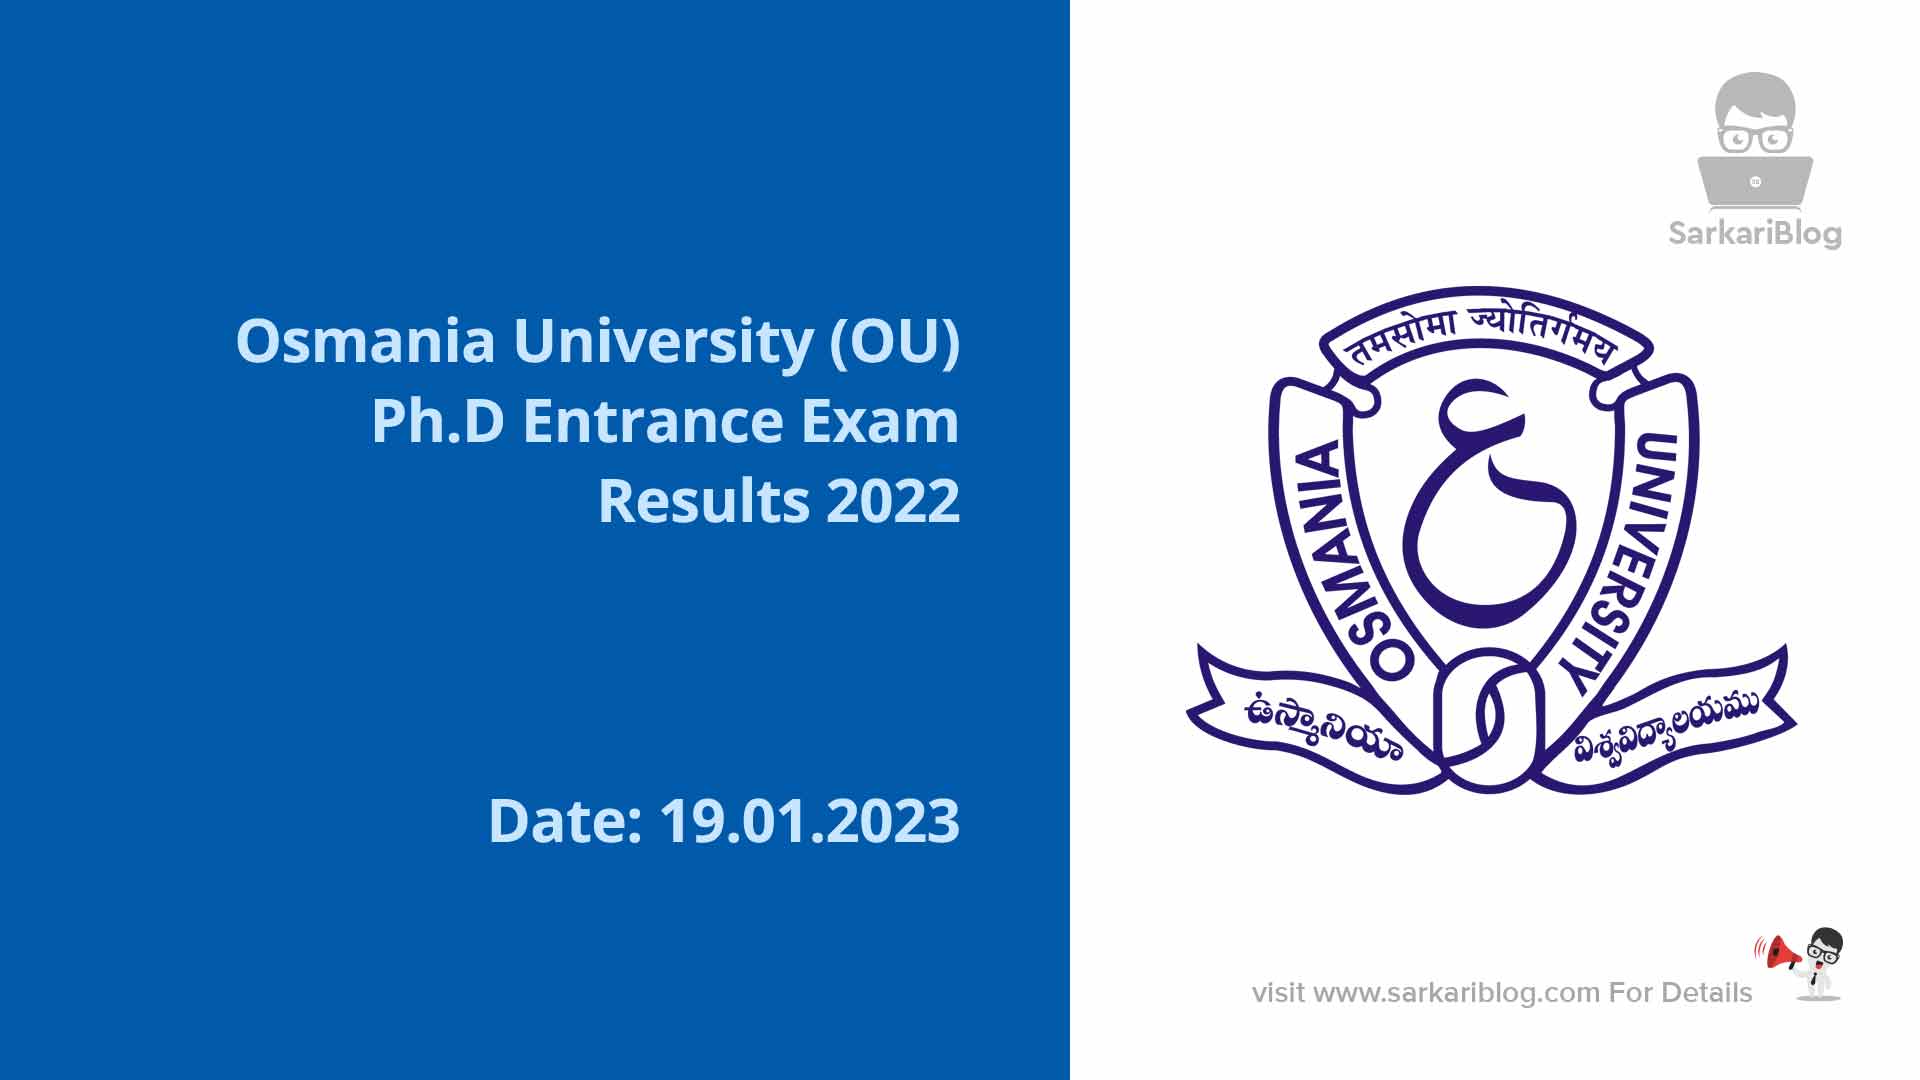 Osmania University (OU) Ph.D Entrance Exam Results 2022